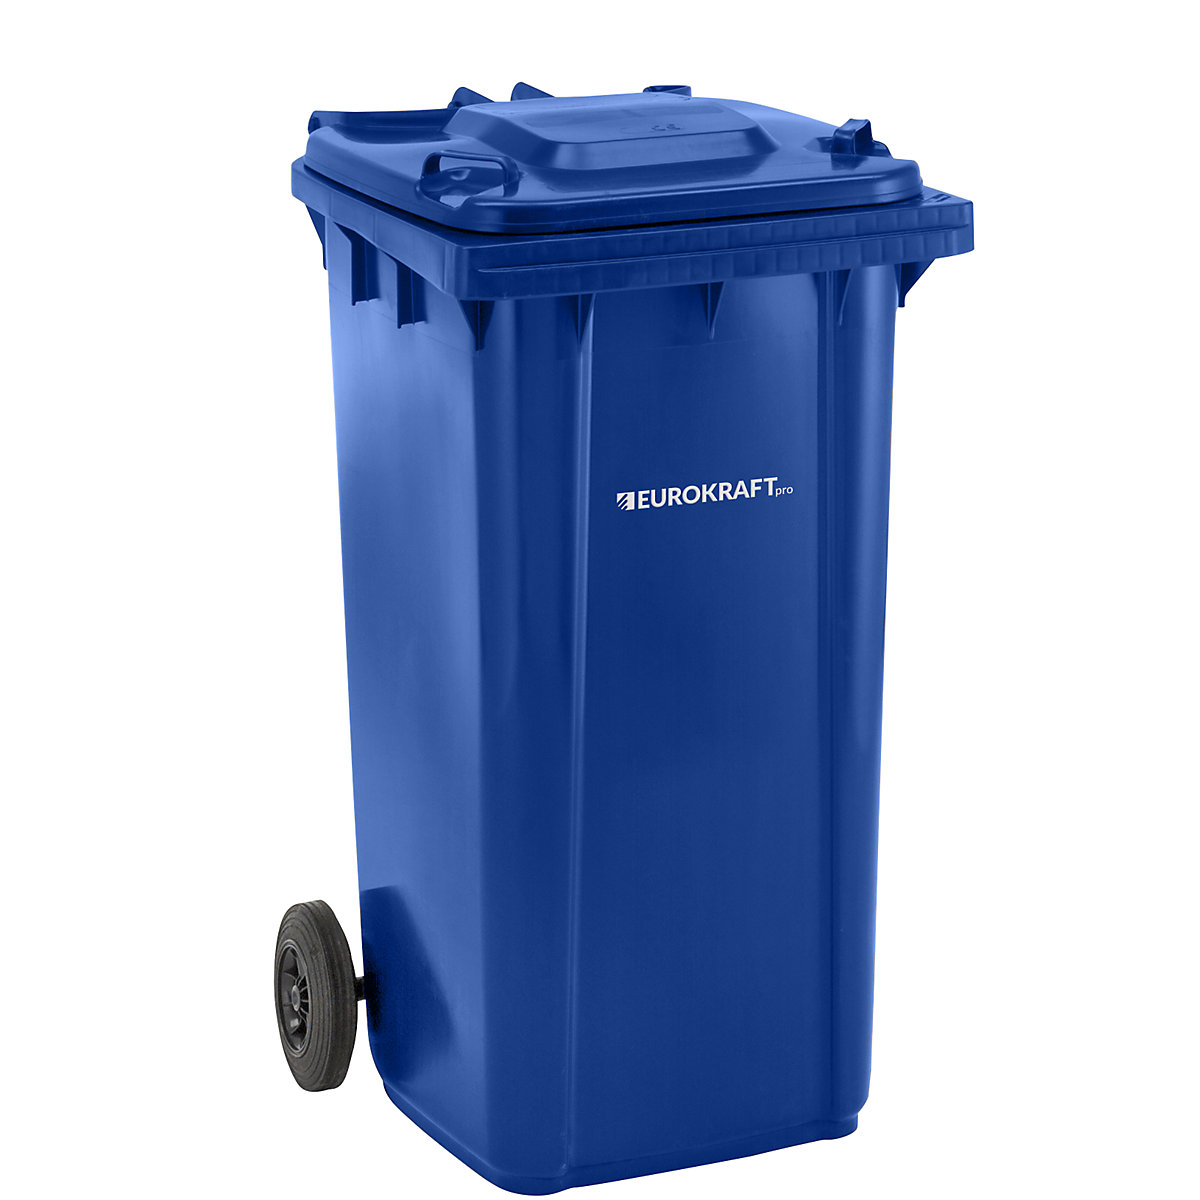 Contentor de lixo em plástico DIN EN 840 – eurokraft pro, volume 240 l, LxAxP 580 x 1100 x 740 mm, azul-6